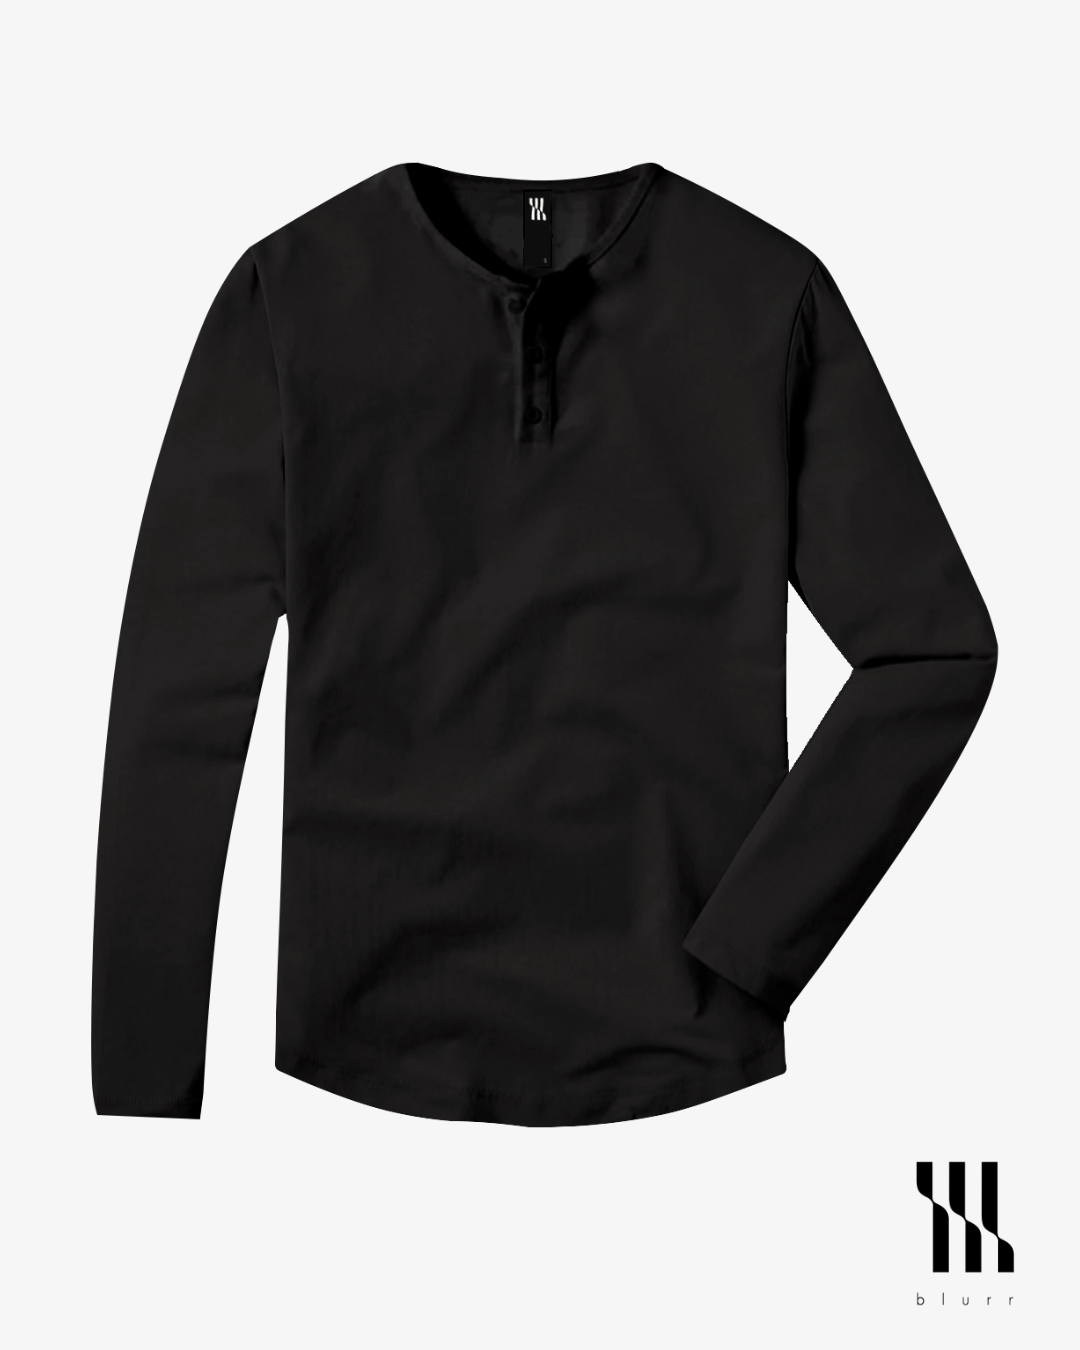 Black T-shirt - Long Sleeve Henley Neck Curved Bottom